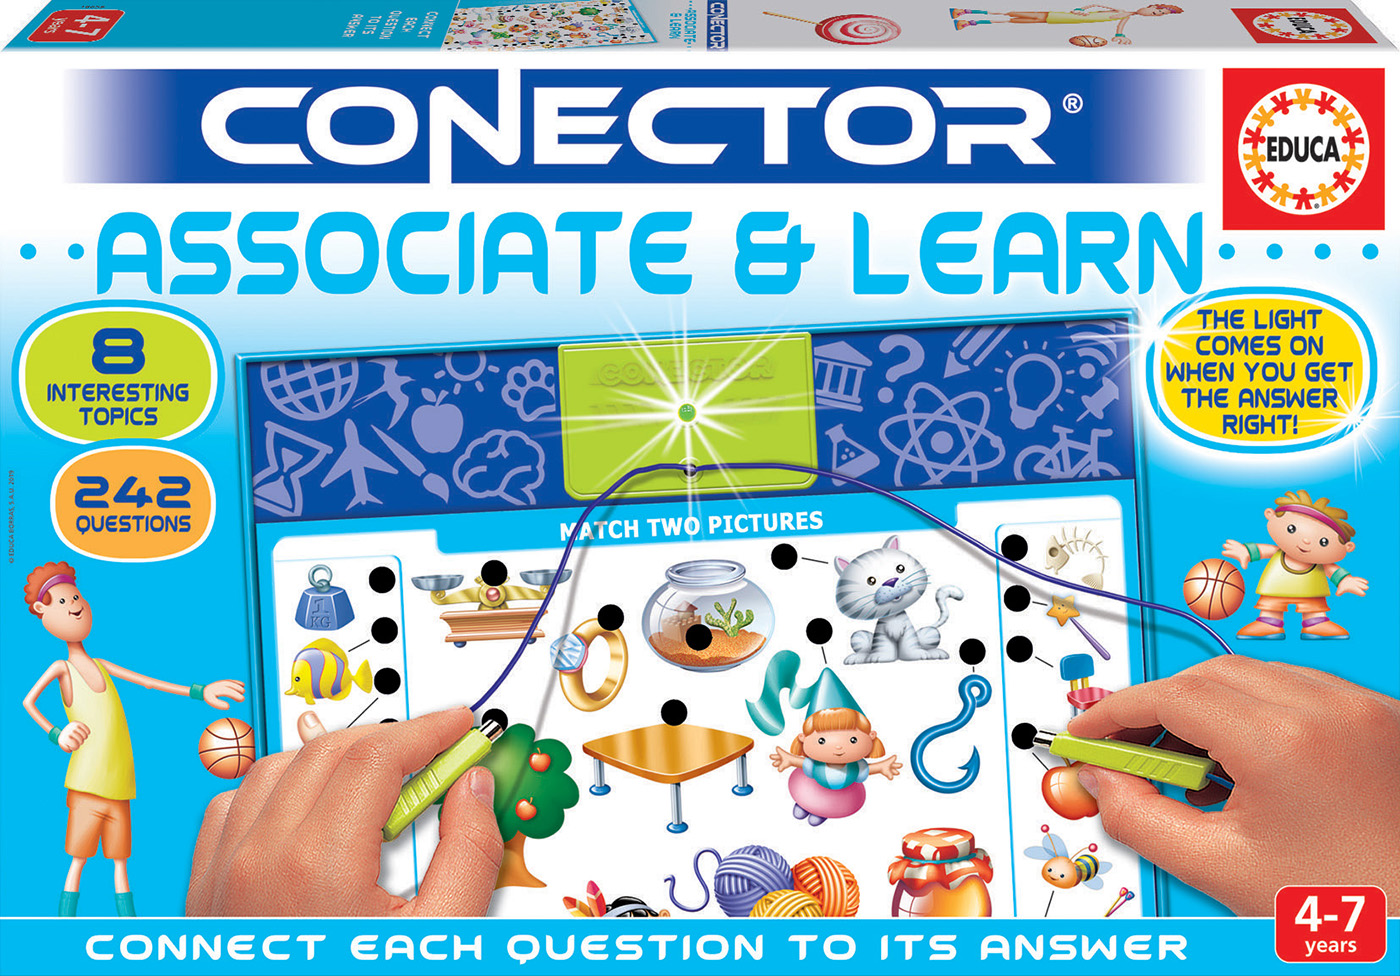 Conector Associate & Learn